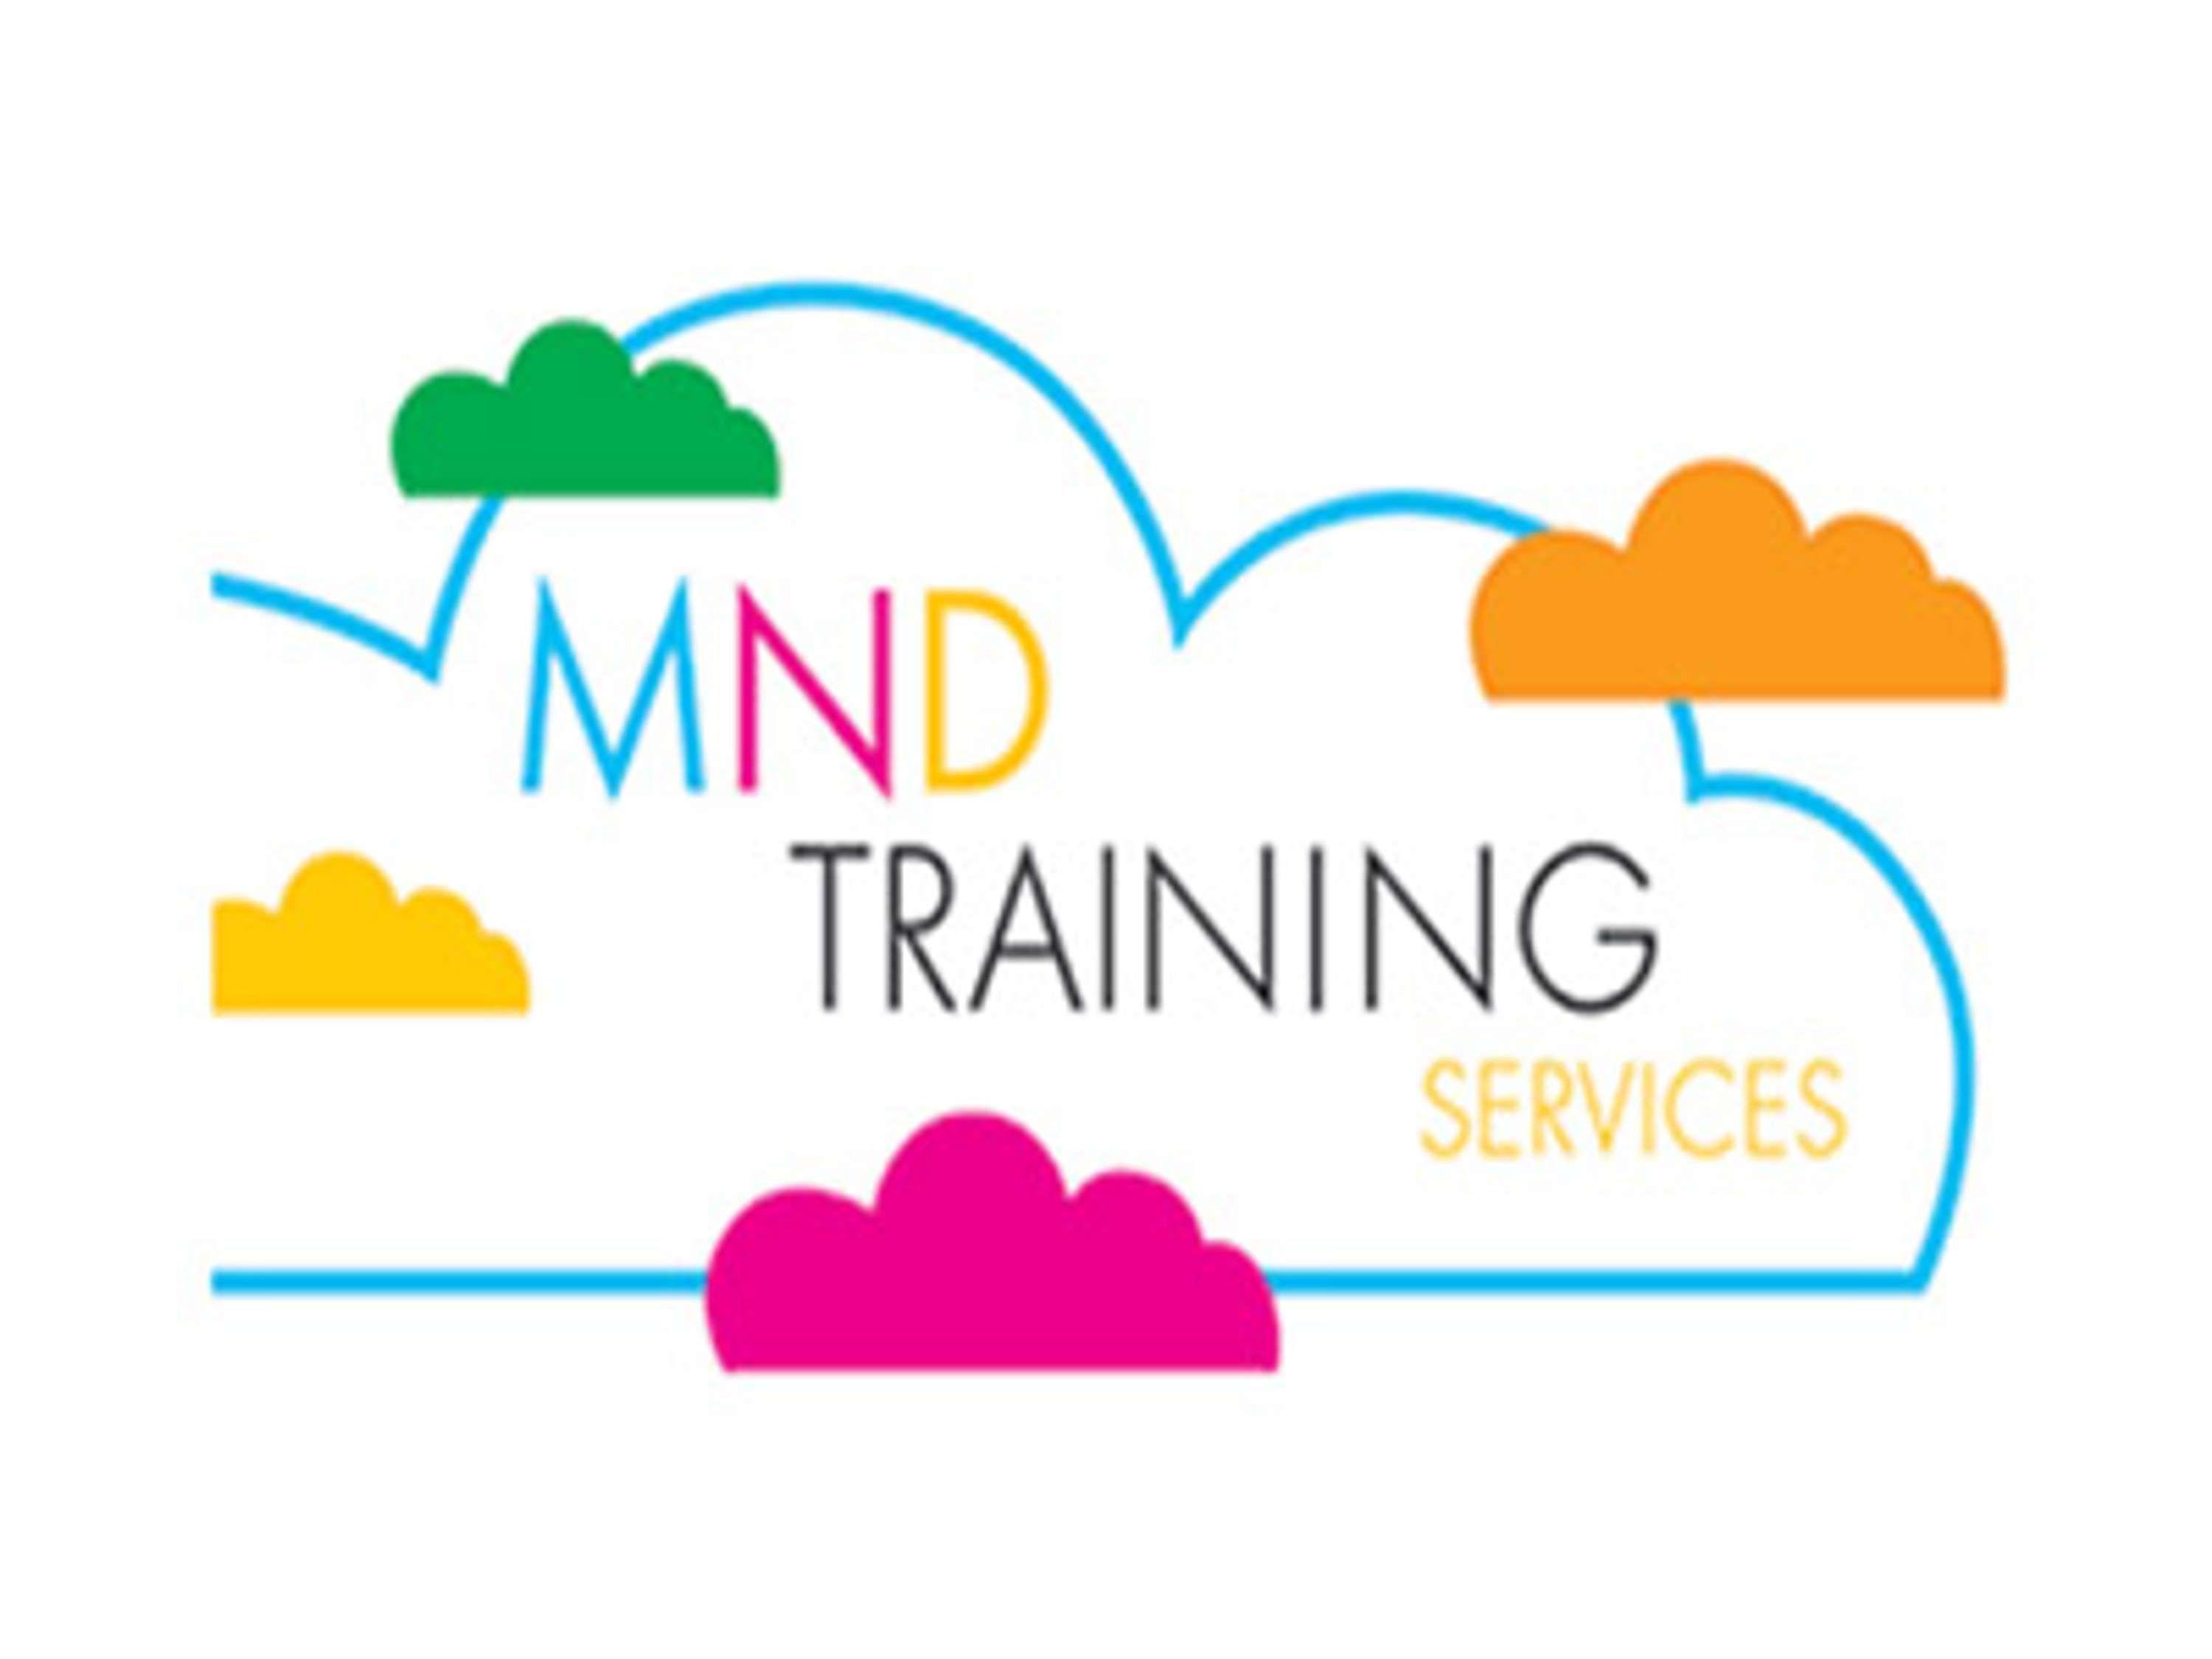 MND Logo - MND Training Services Creative Logo Design Created by Logoforwork ...